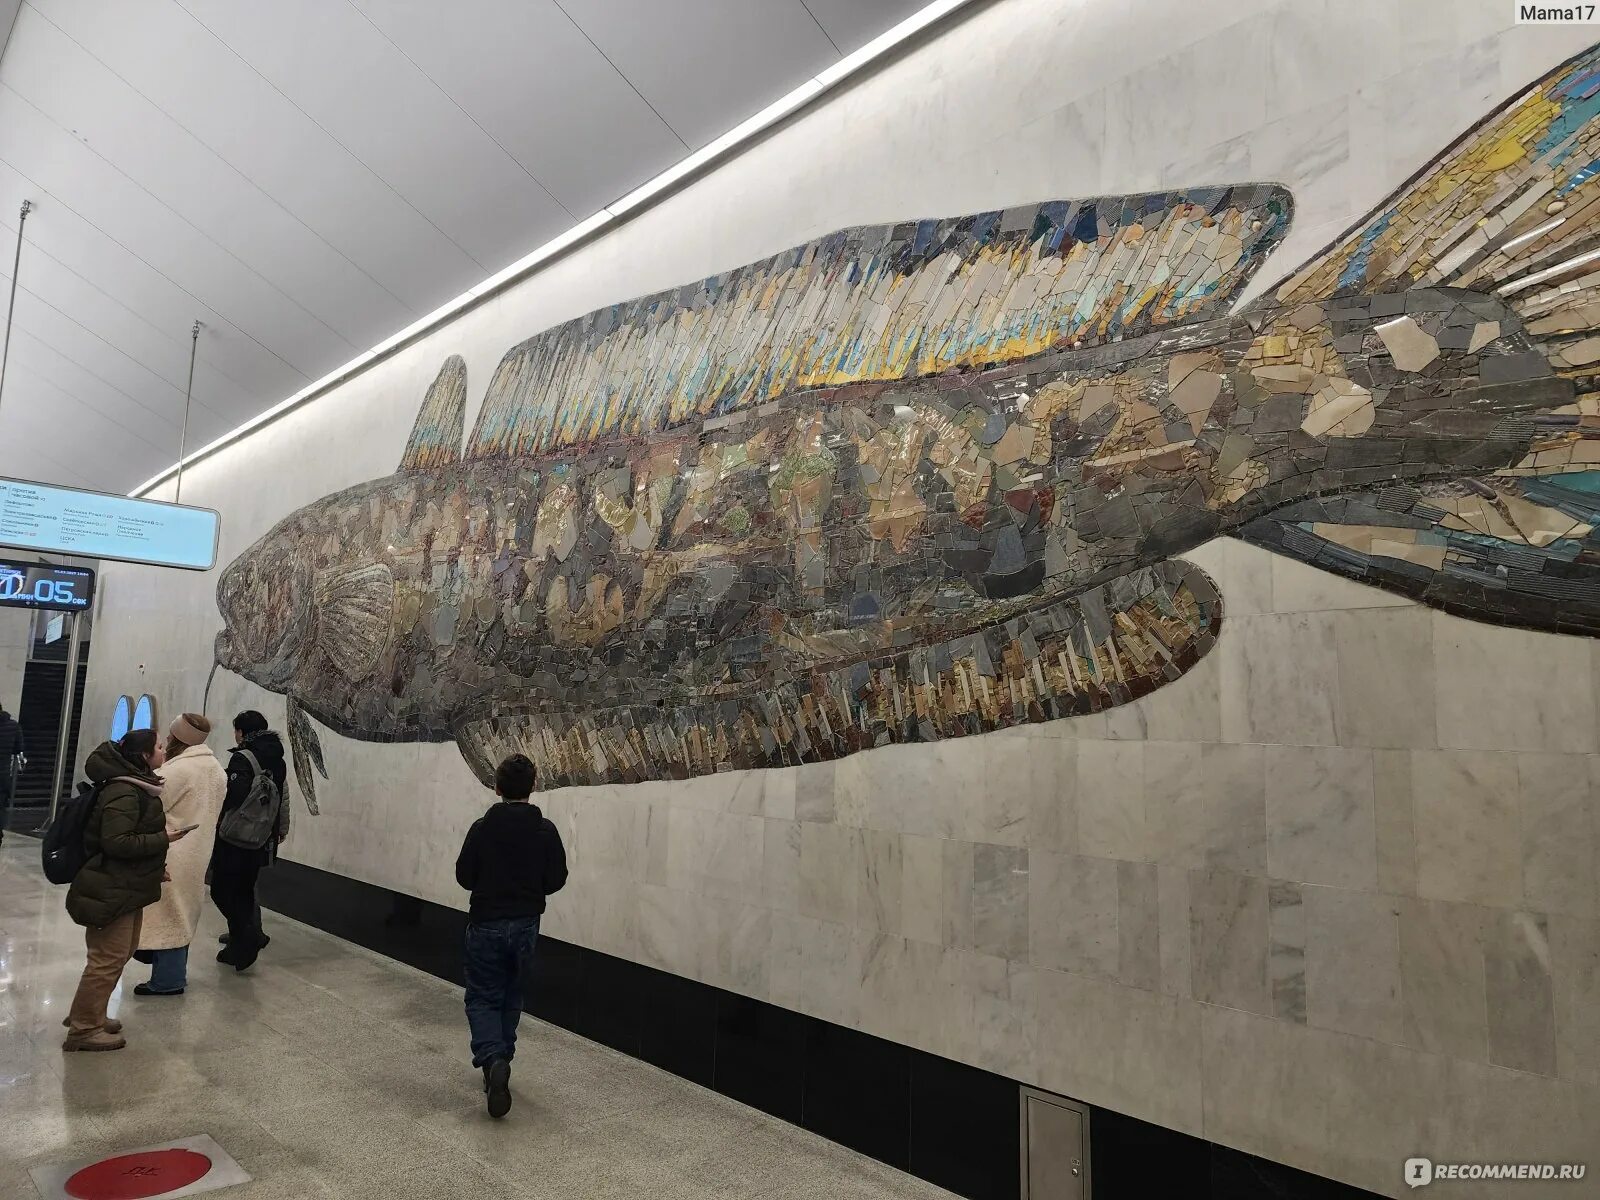 Кто кроме рыб плавает на станции бкл. Станция метро с рыбами. Рыбы Московского метрополитена. Станция метро с рыбами в Москве. Станция БКЛ С рыбами.